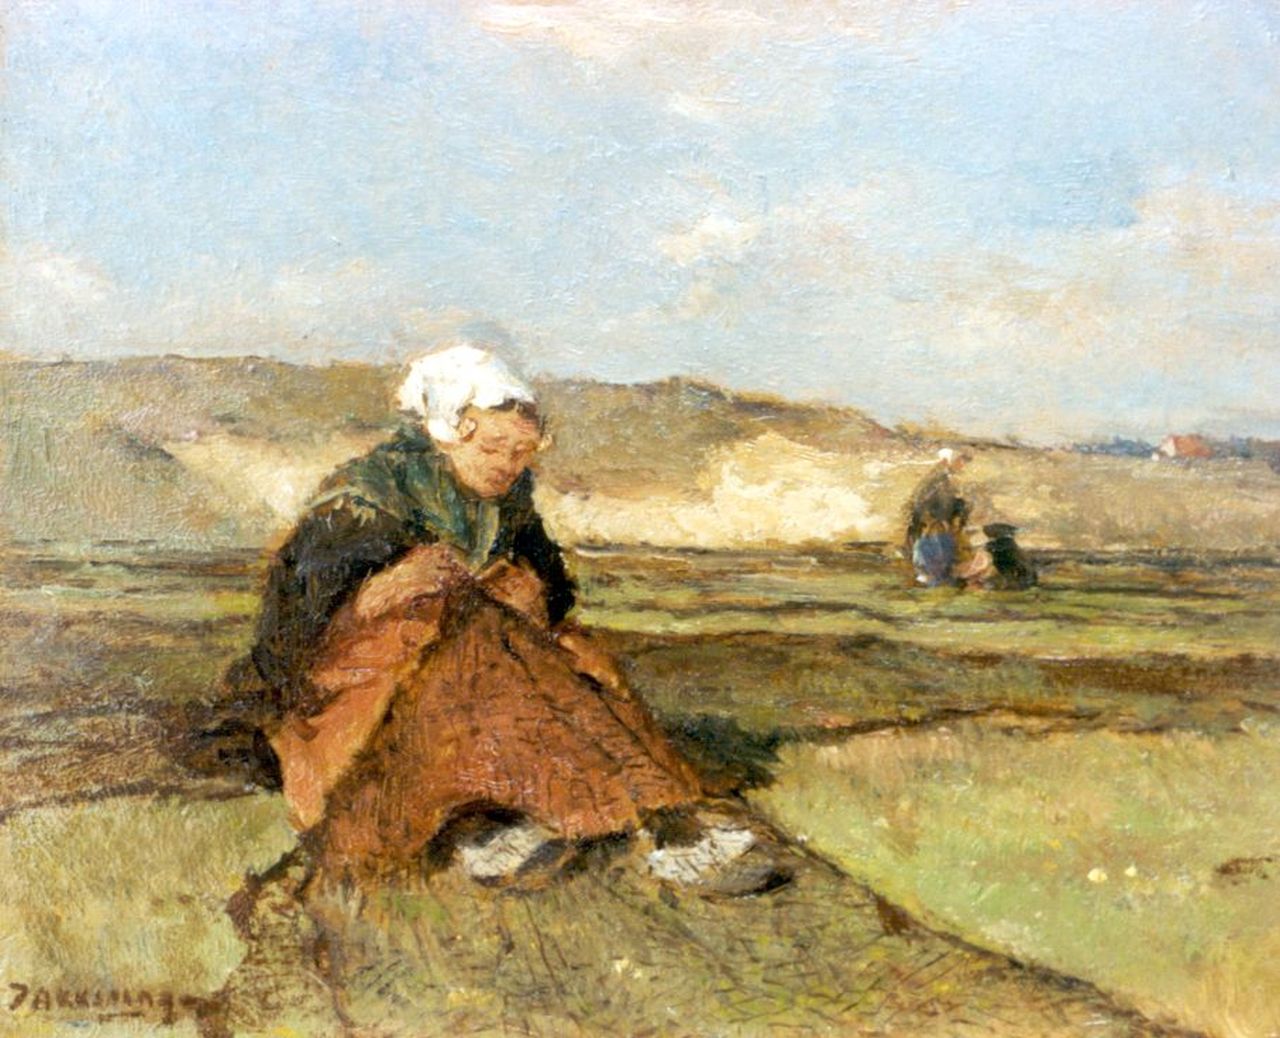 Akkeringa J.E.H.  | 'Johannes Evert' Hendrik Akkeringa, Mending nets in the dunes, oil on panel 14.5 x 17.1 cm, signed l.l.